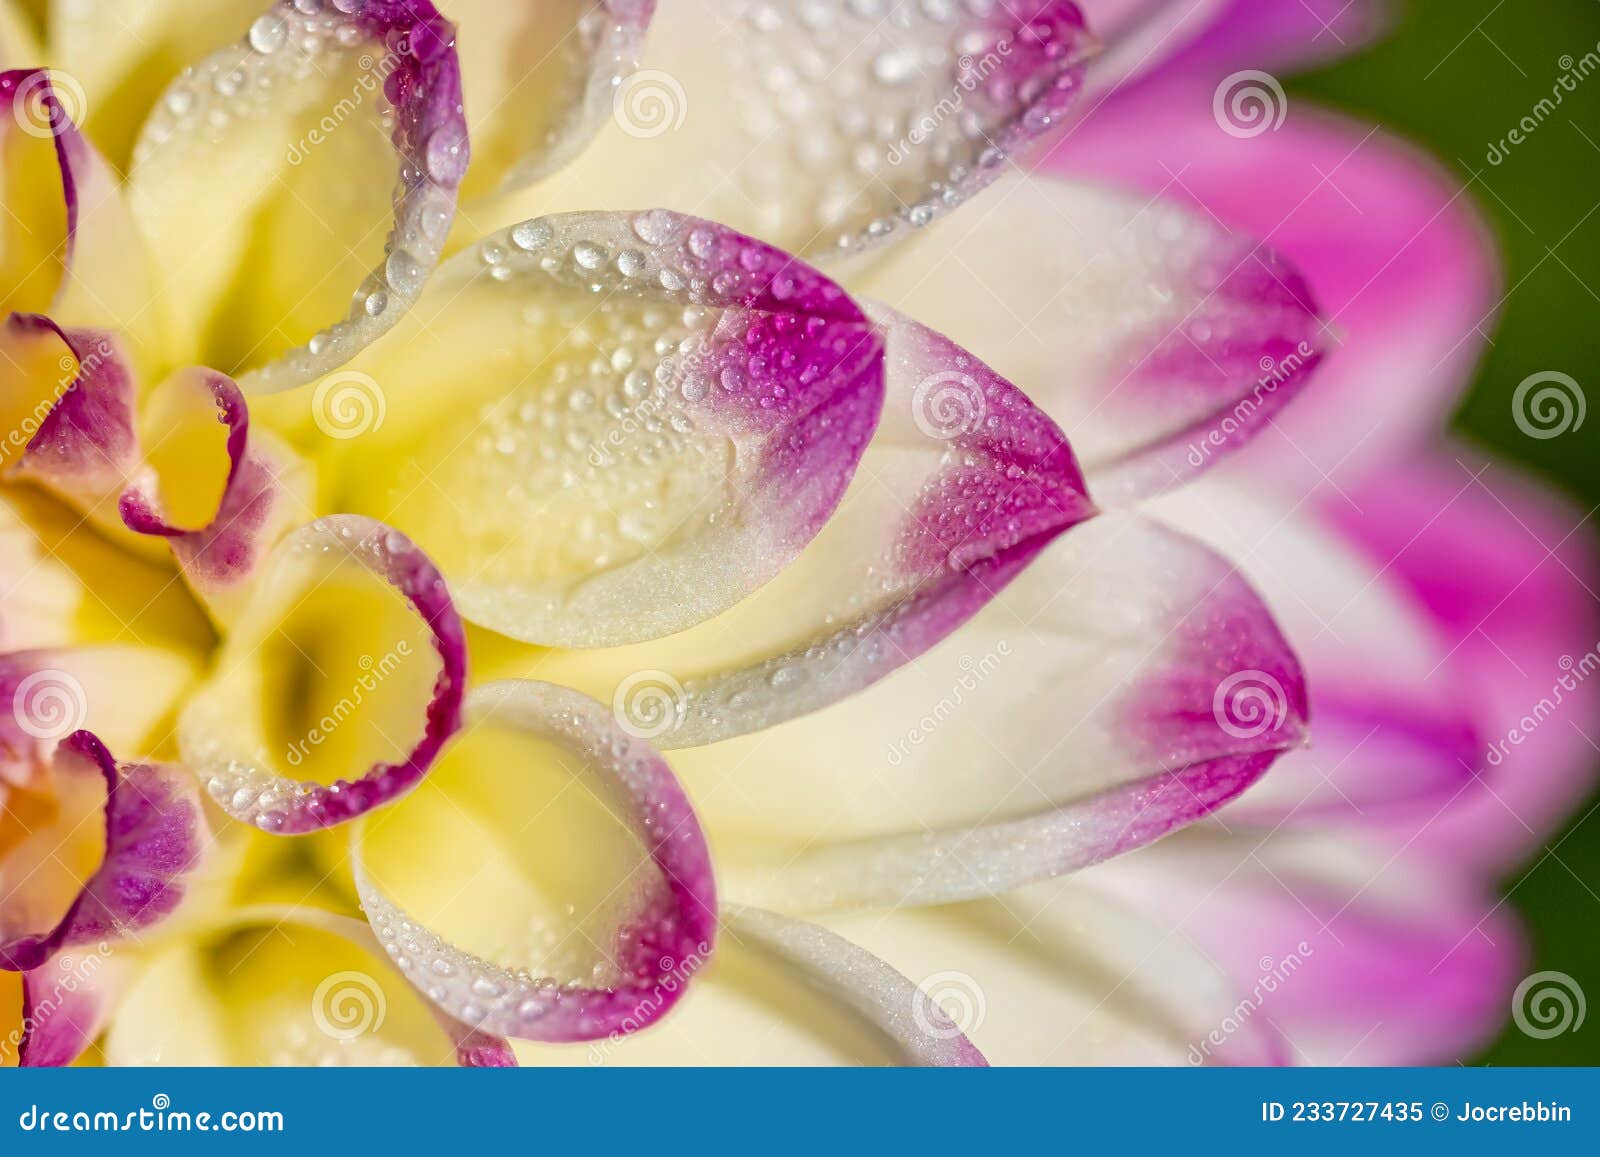 extreme close up of dew laden dahlia petals